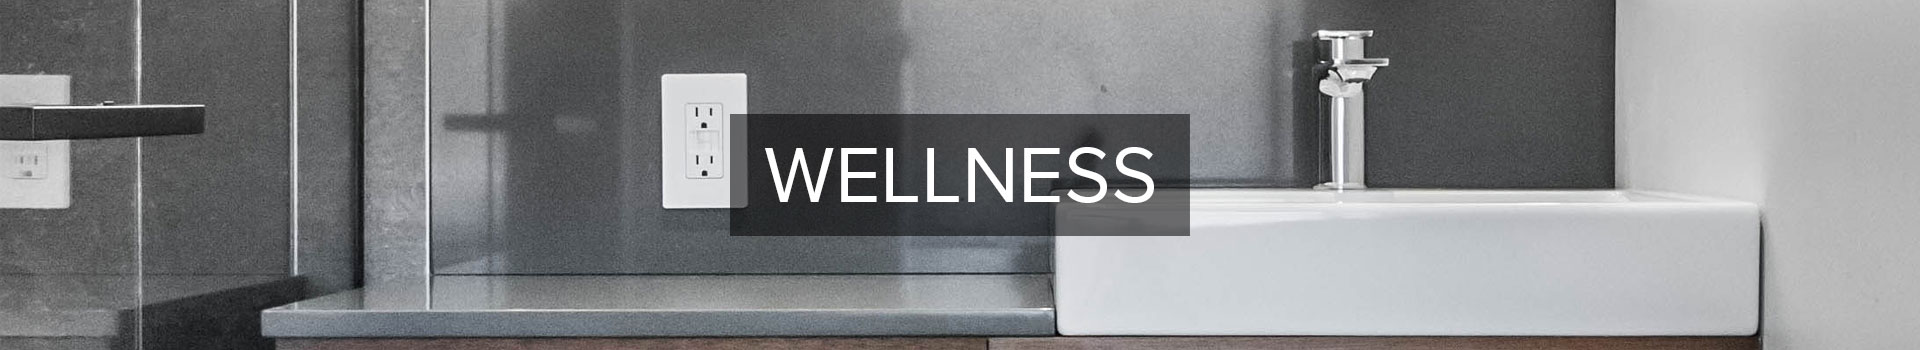 bammer_homepage-wellness_2C